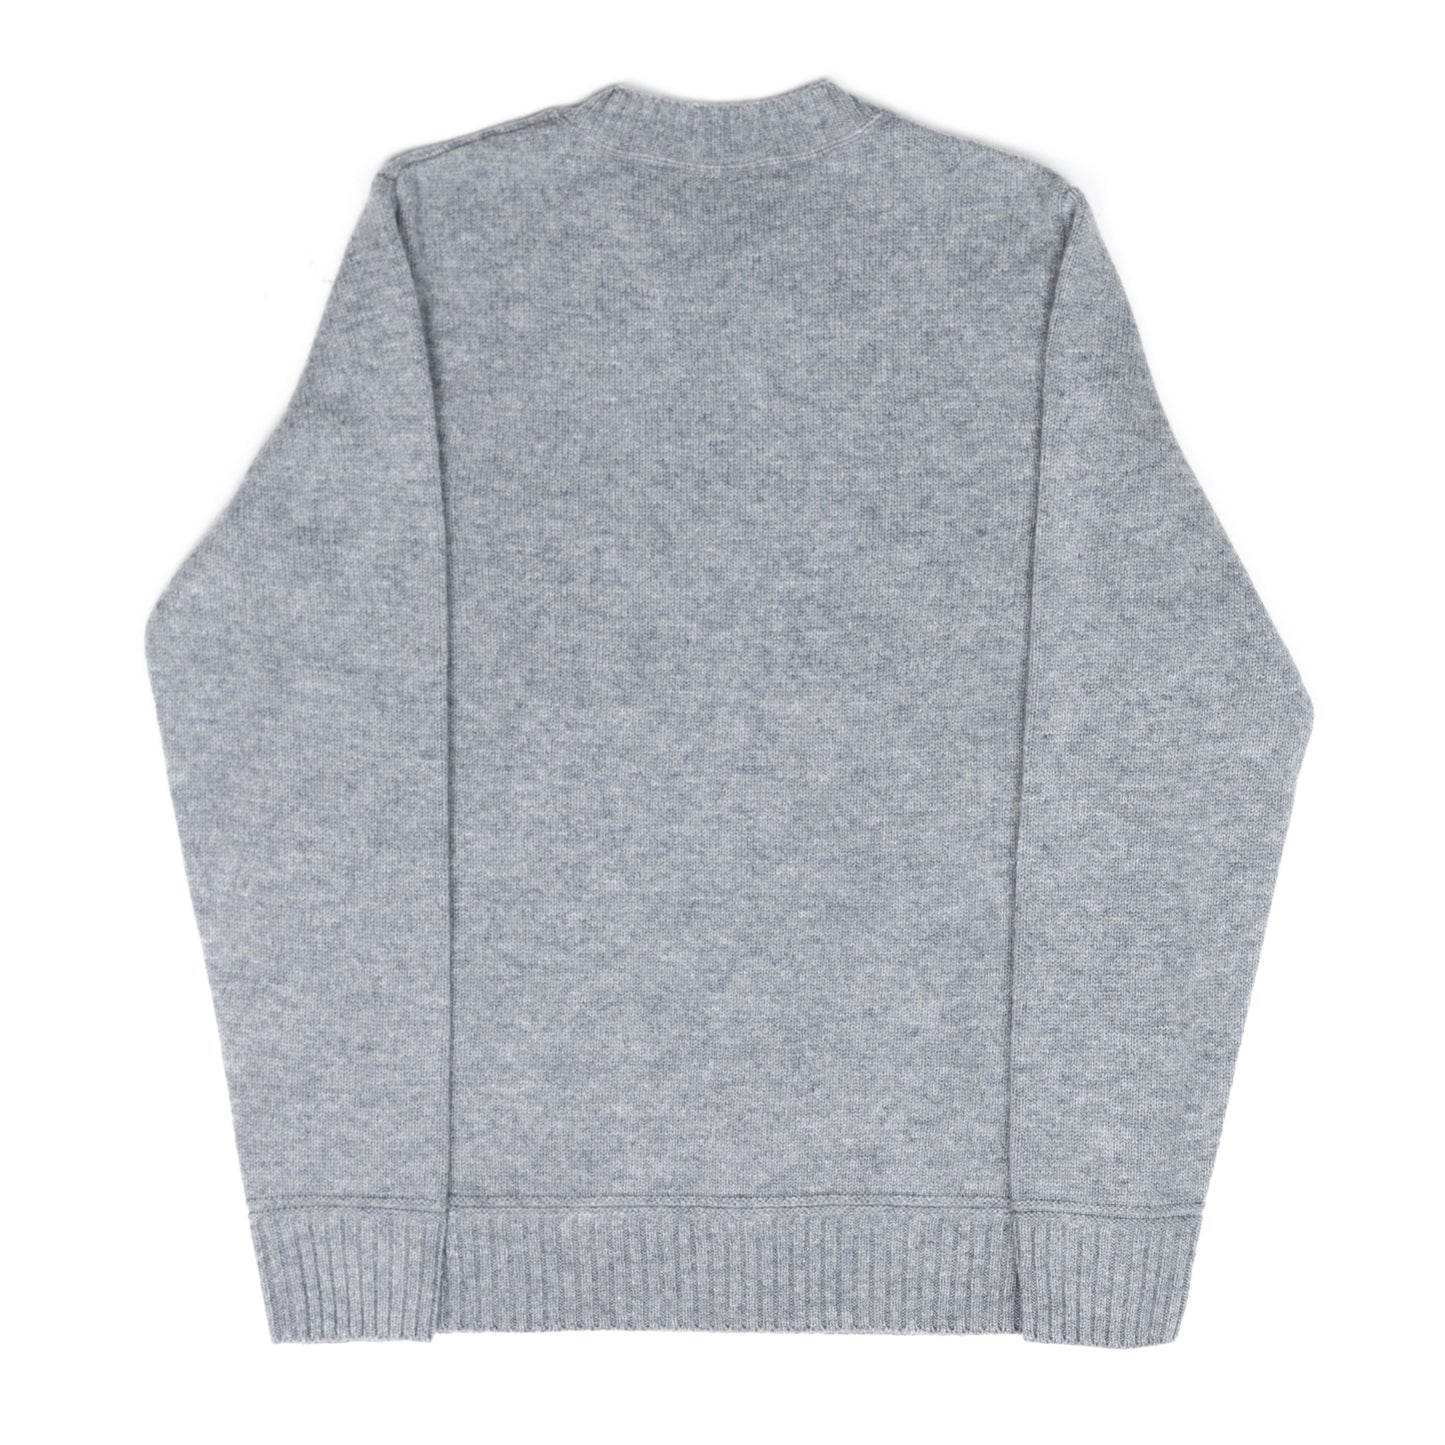 Yosqi London Wool Knitted Sweater